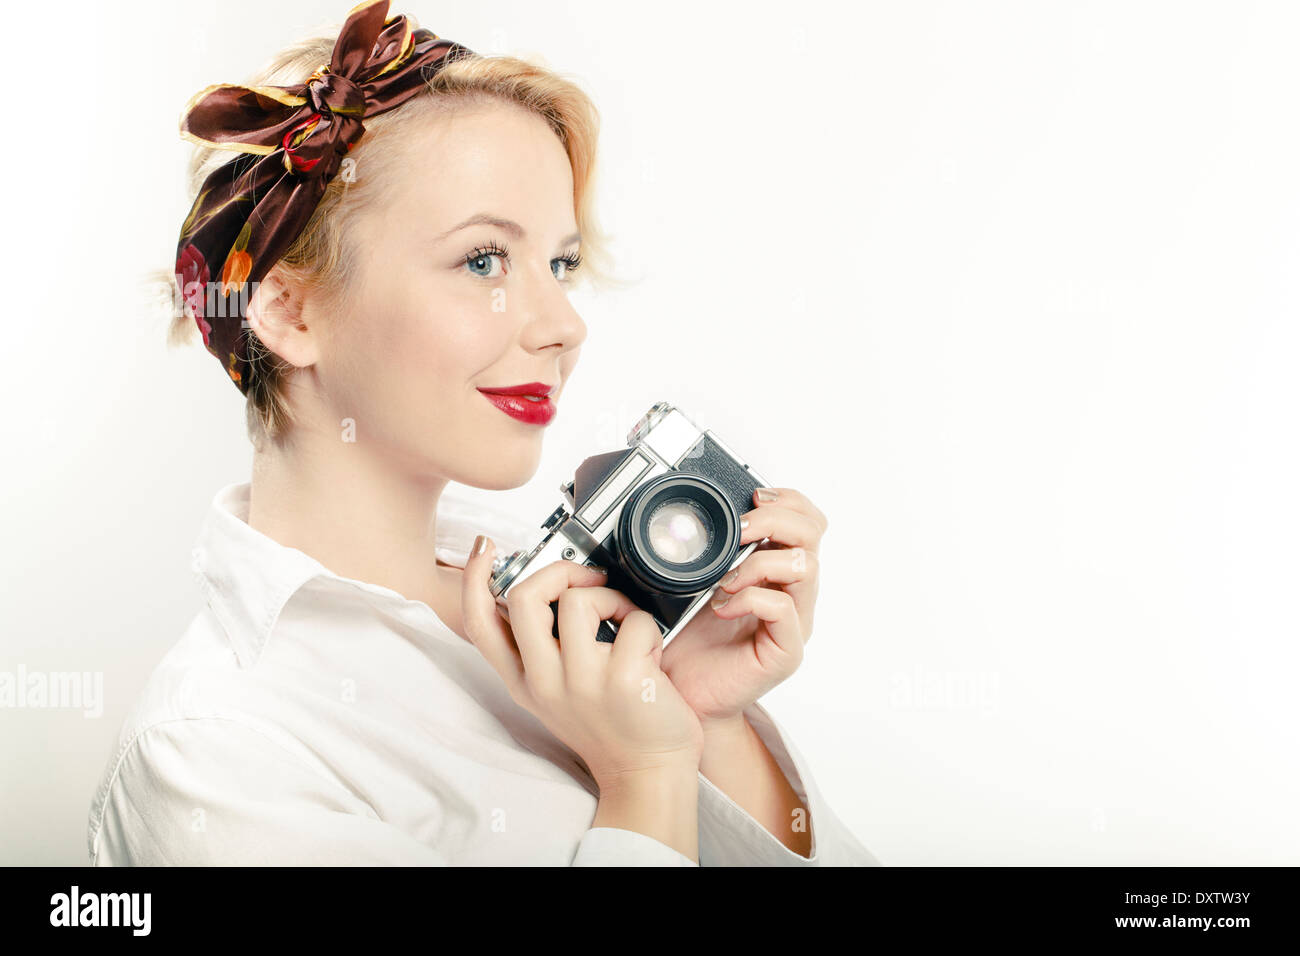 Young Woman Using Photo Camera, Portrait Stock Photo